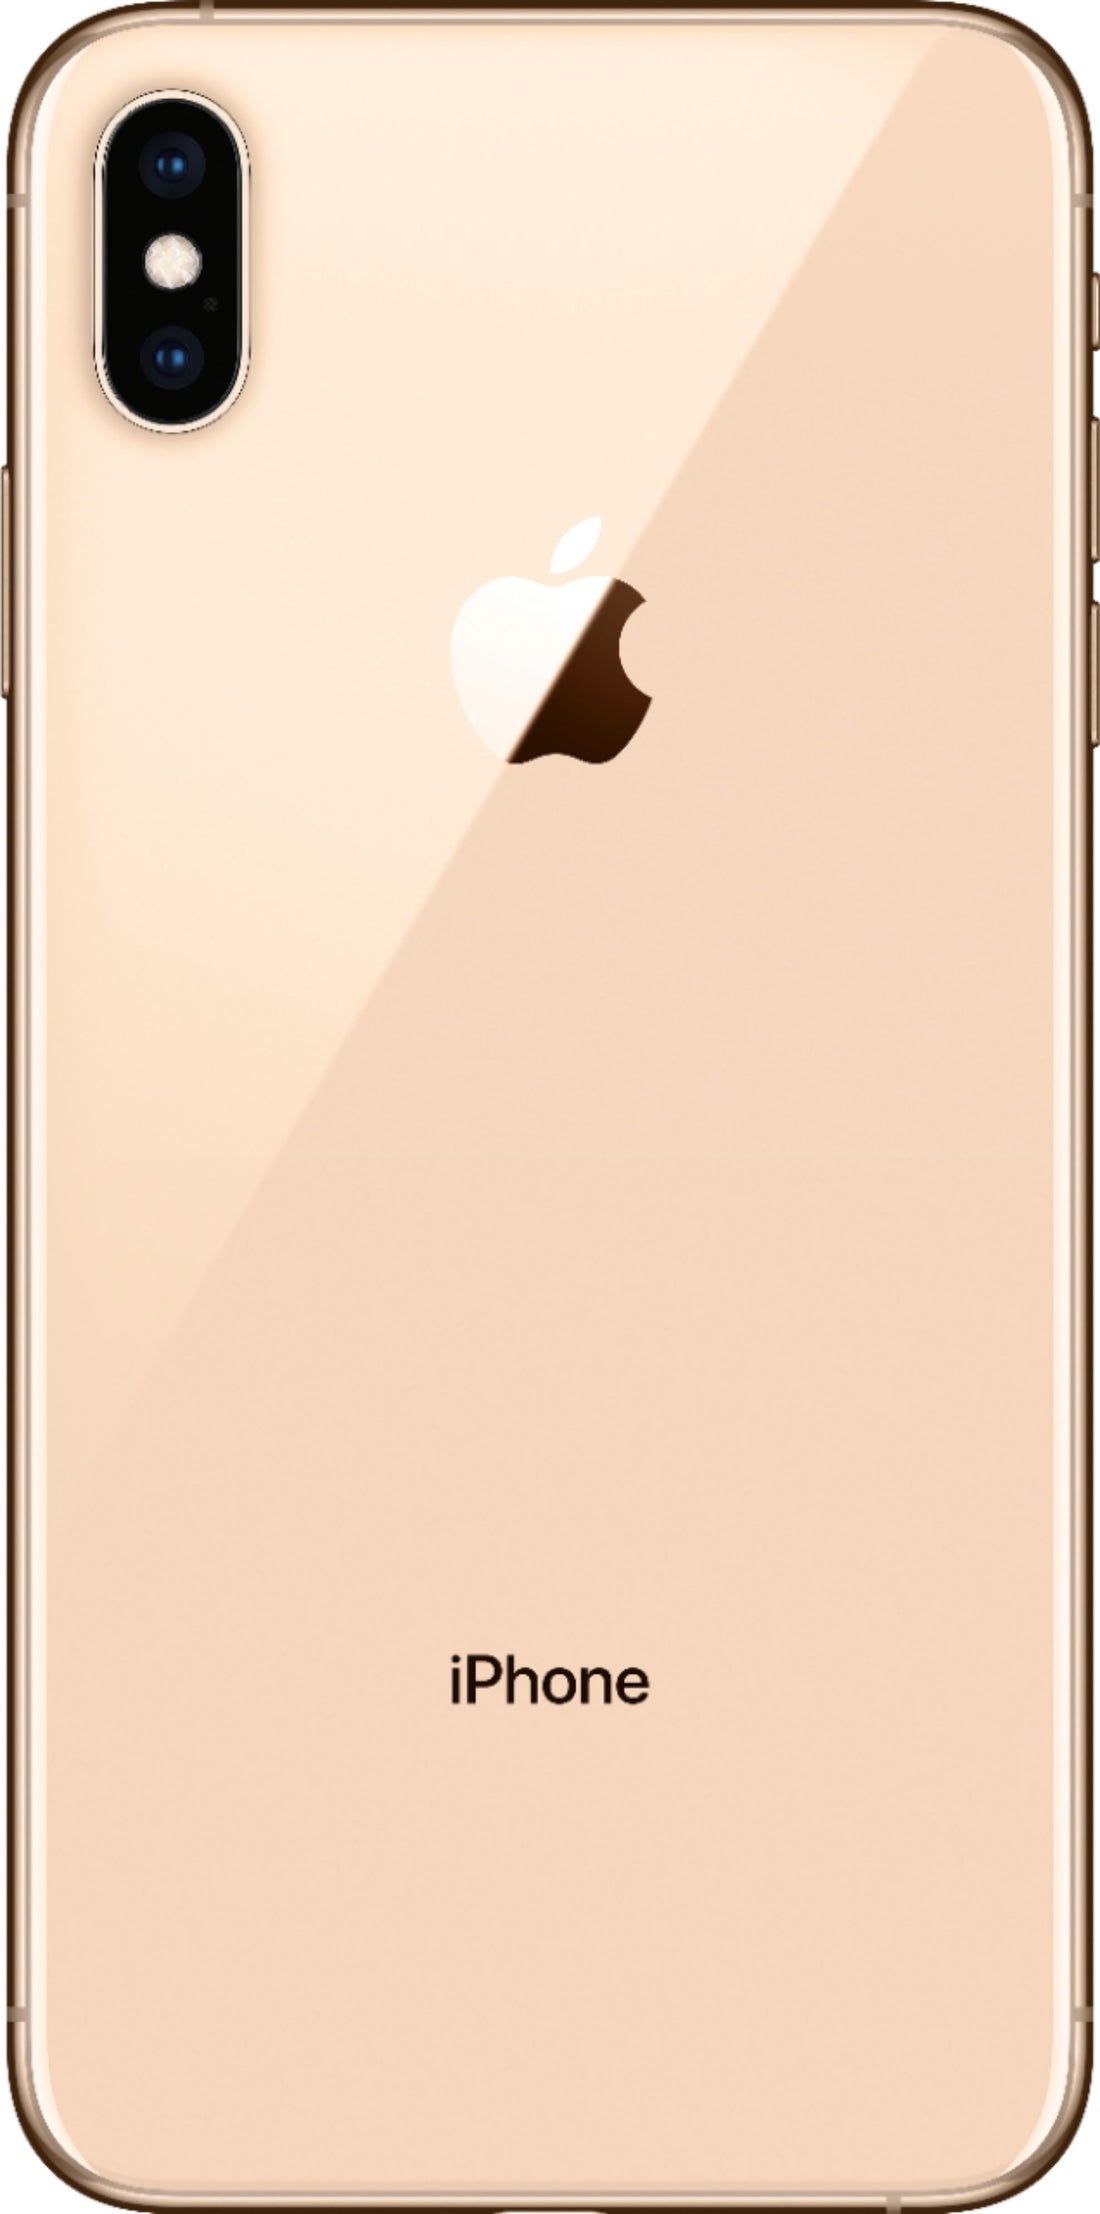 Apple iPhone XS Max 64GB (Unlocked) - Gold (Refurbished)